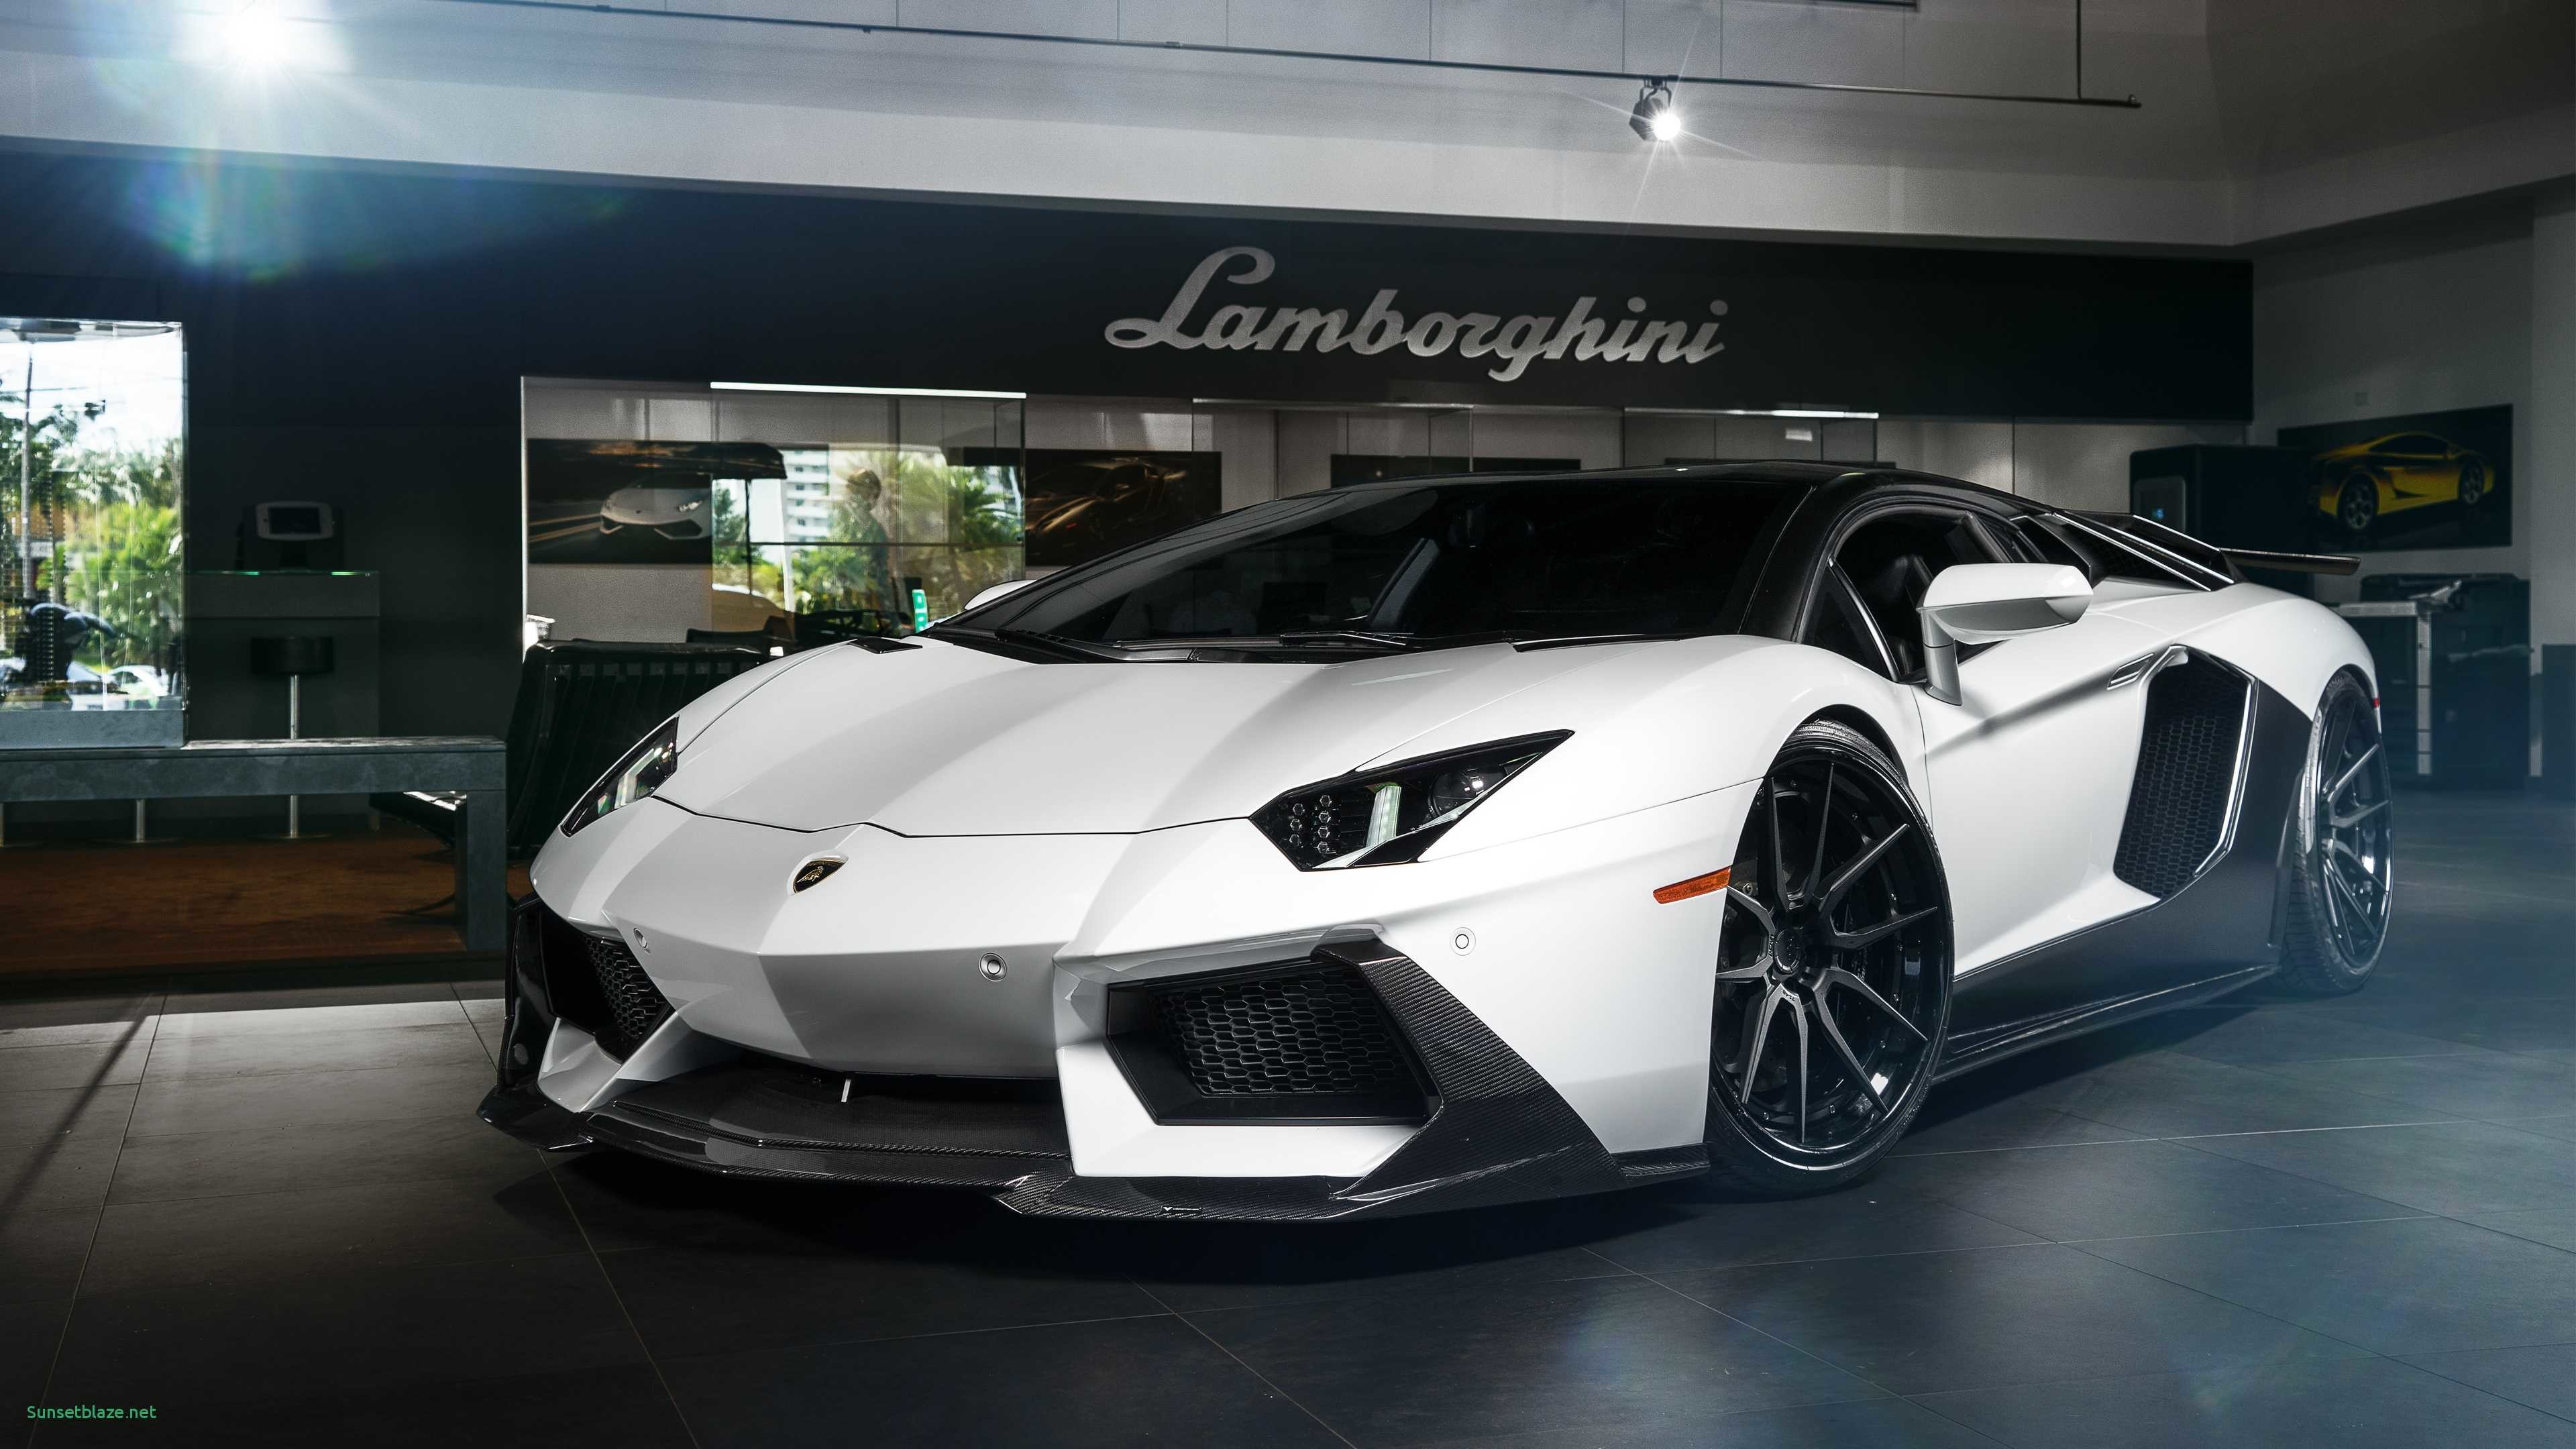 3840x2160 335 Lamborghini Aventador Hd Wallpapers Beautiful Of Hd Definition Exotic  Car Wallpapers